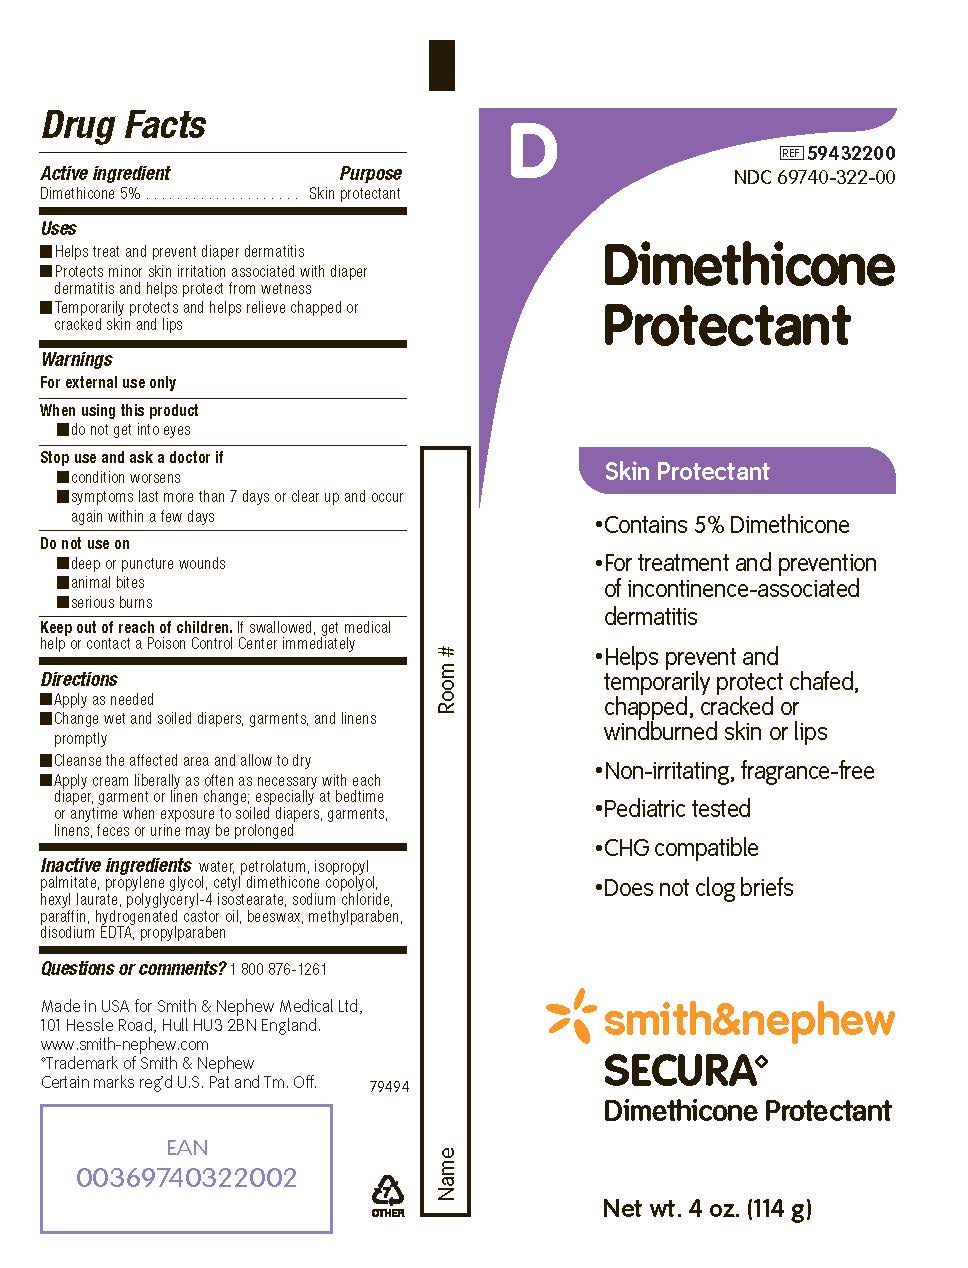 Secura Dimethicone Protectant, 3.5 g Packet 5459435000-Case - MAR-J Medical  Supply, Inc.